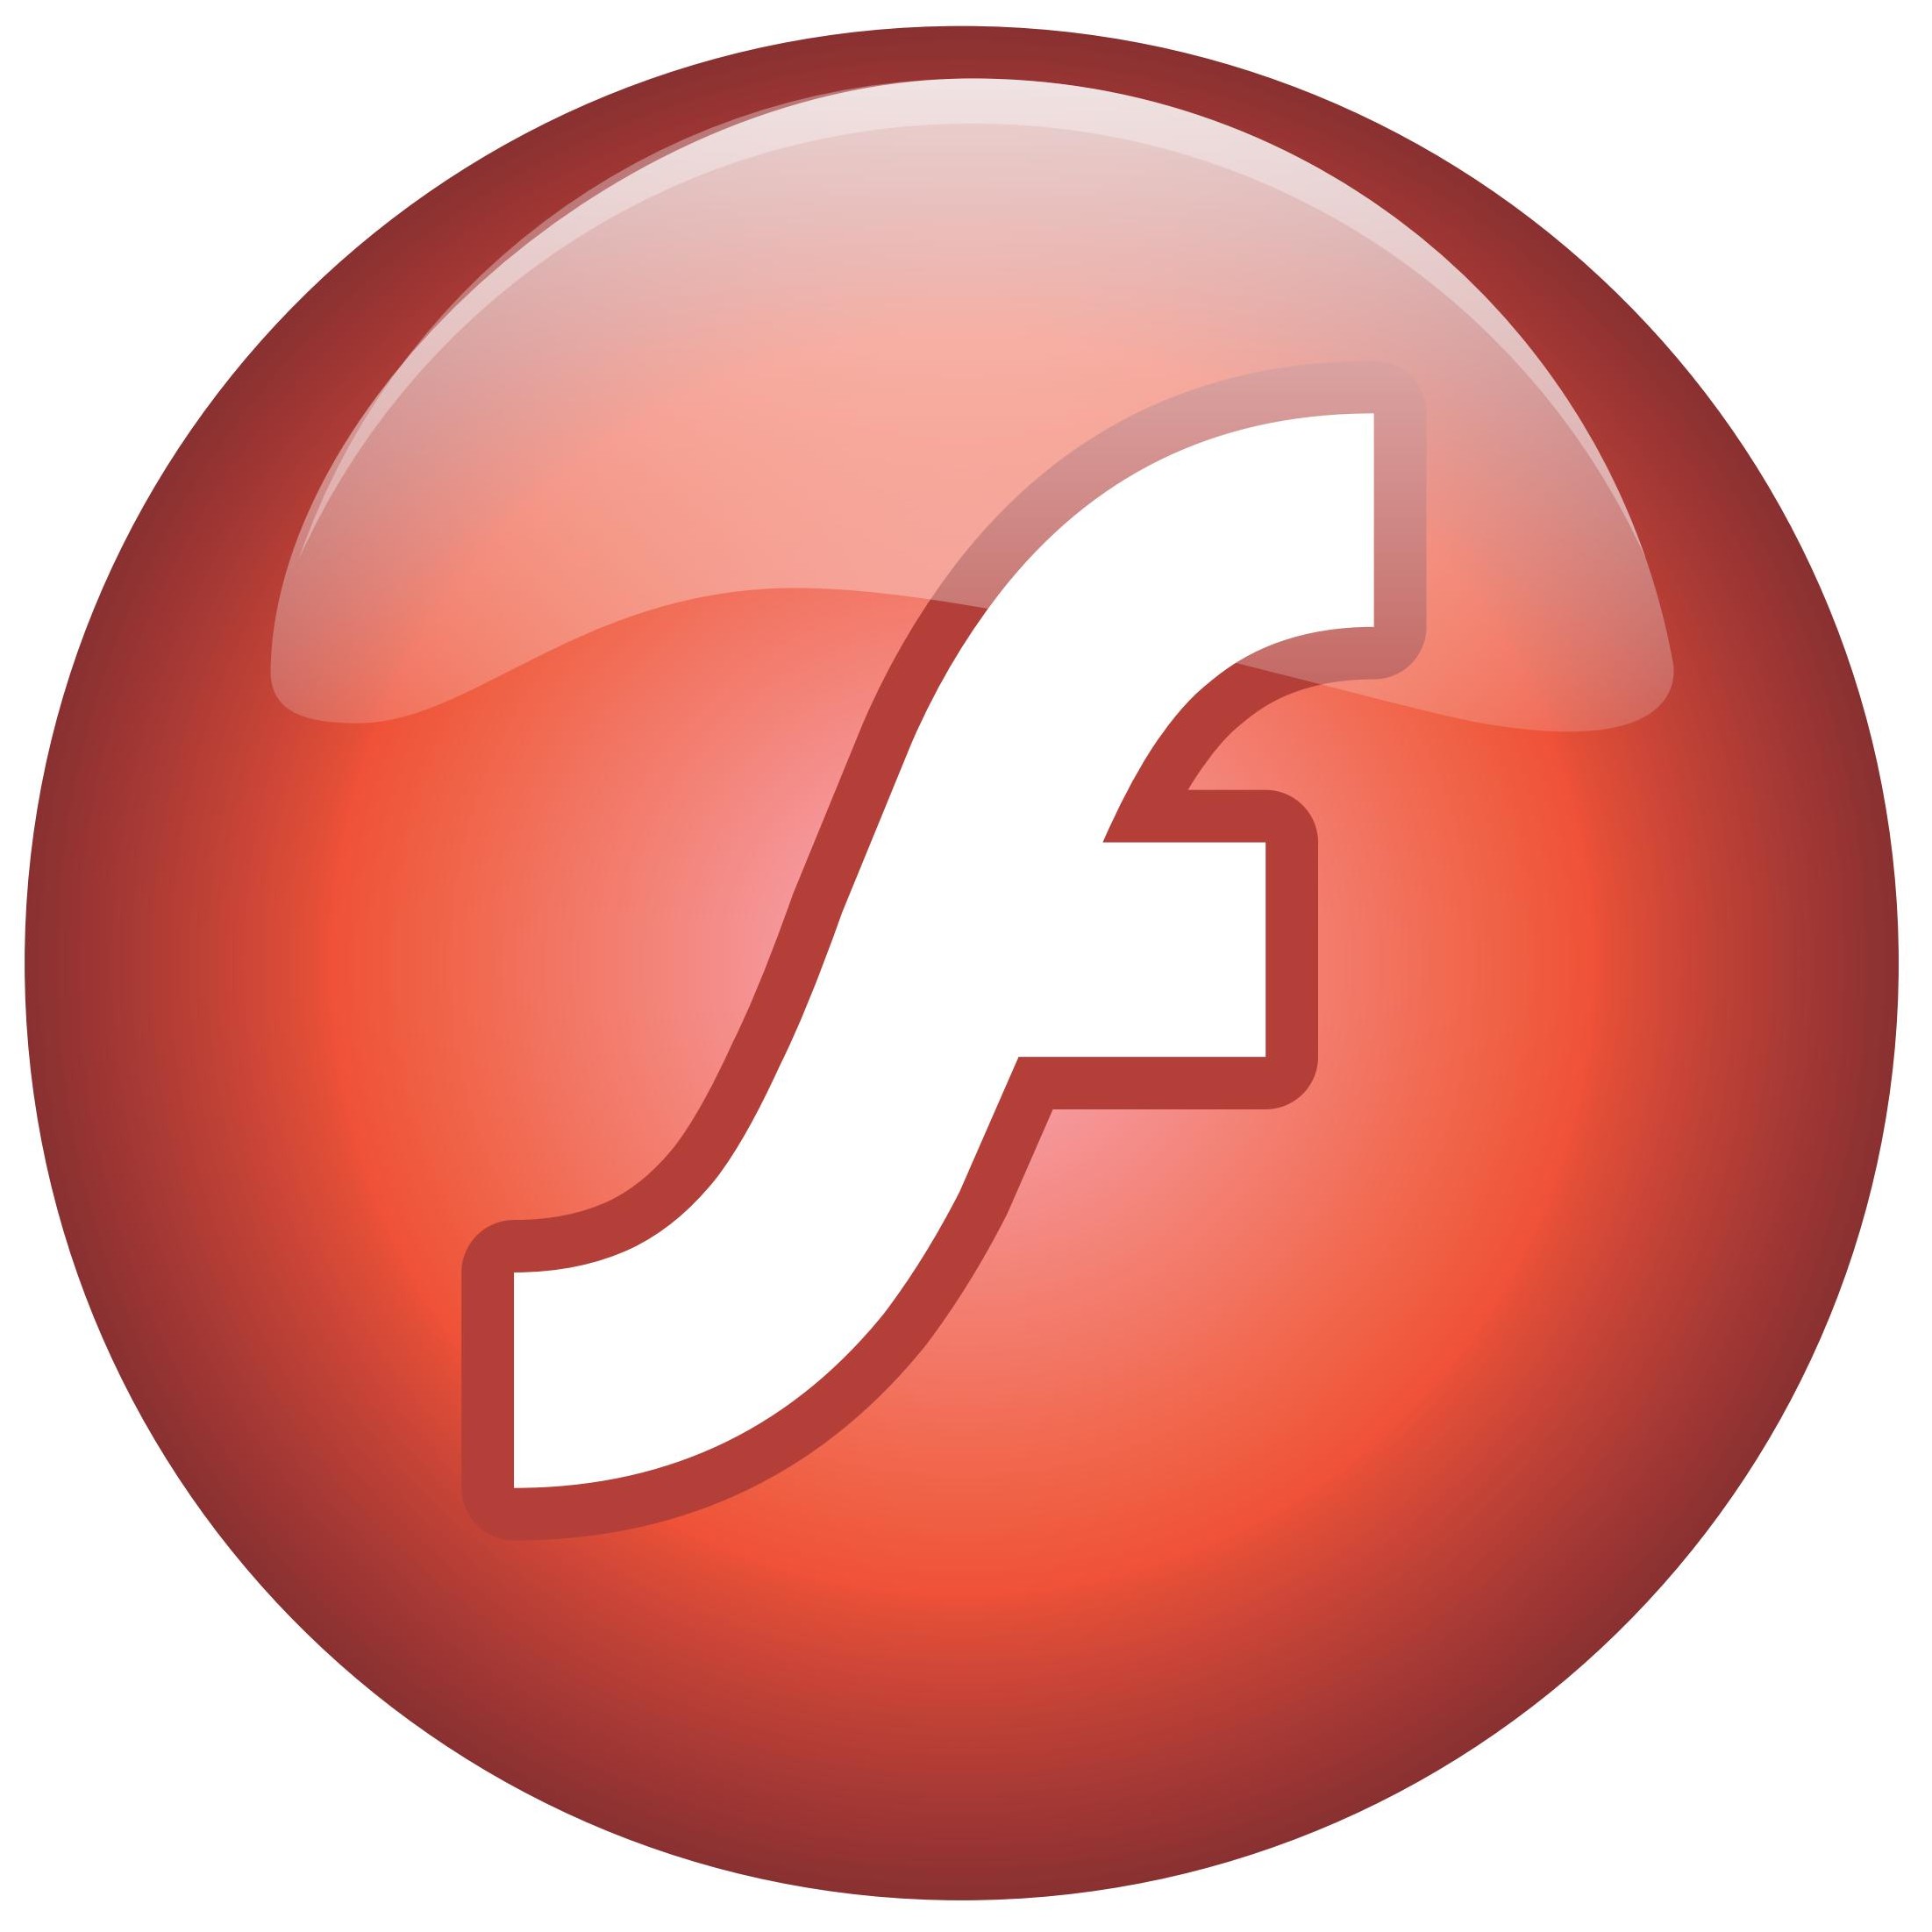   View all. Adobe Flash 8